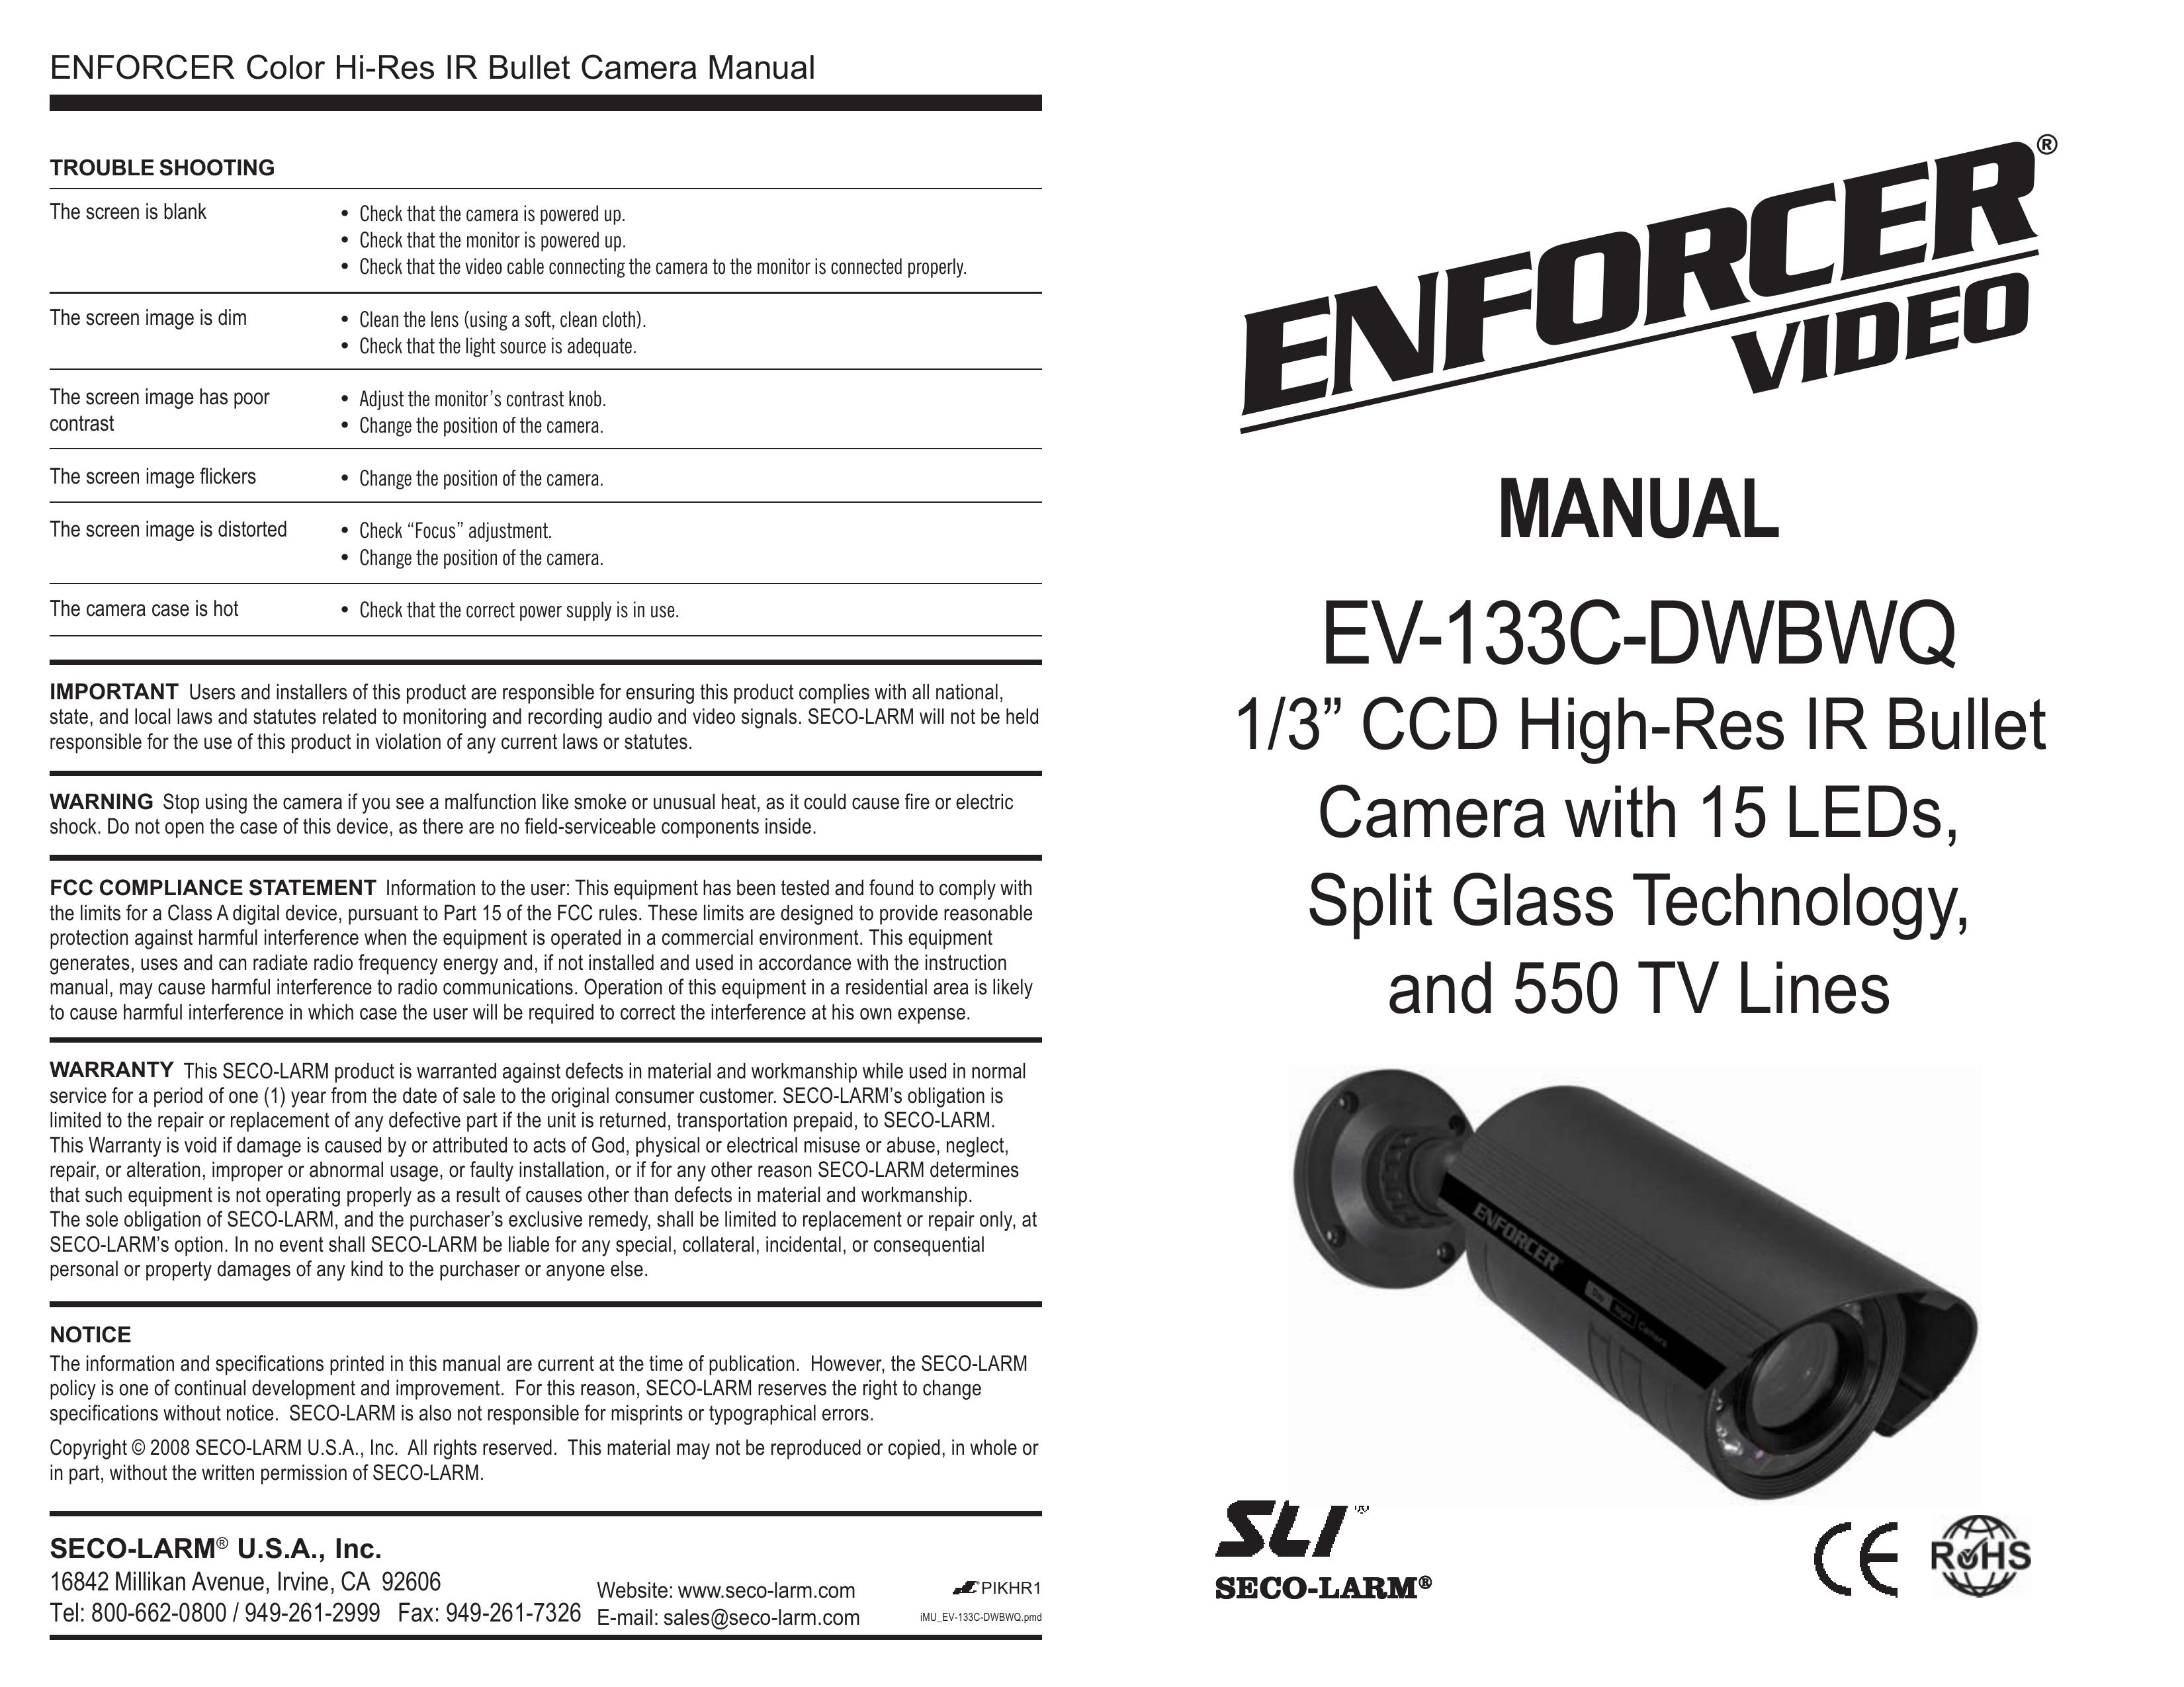 SECO-LARM USA EV-133C-DWBWQ Security Camera User Manual